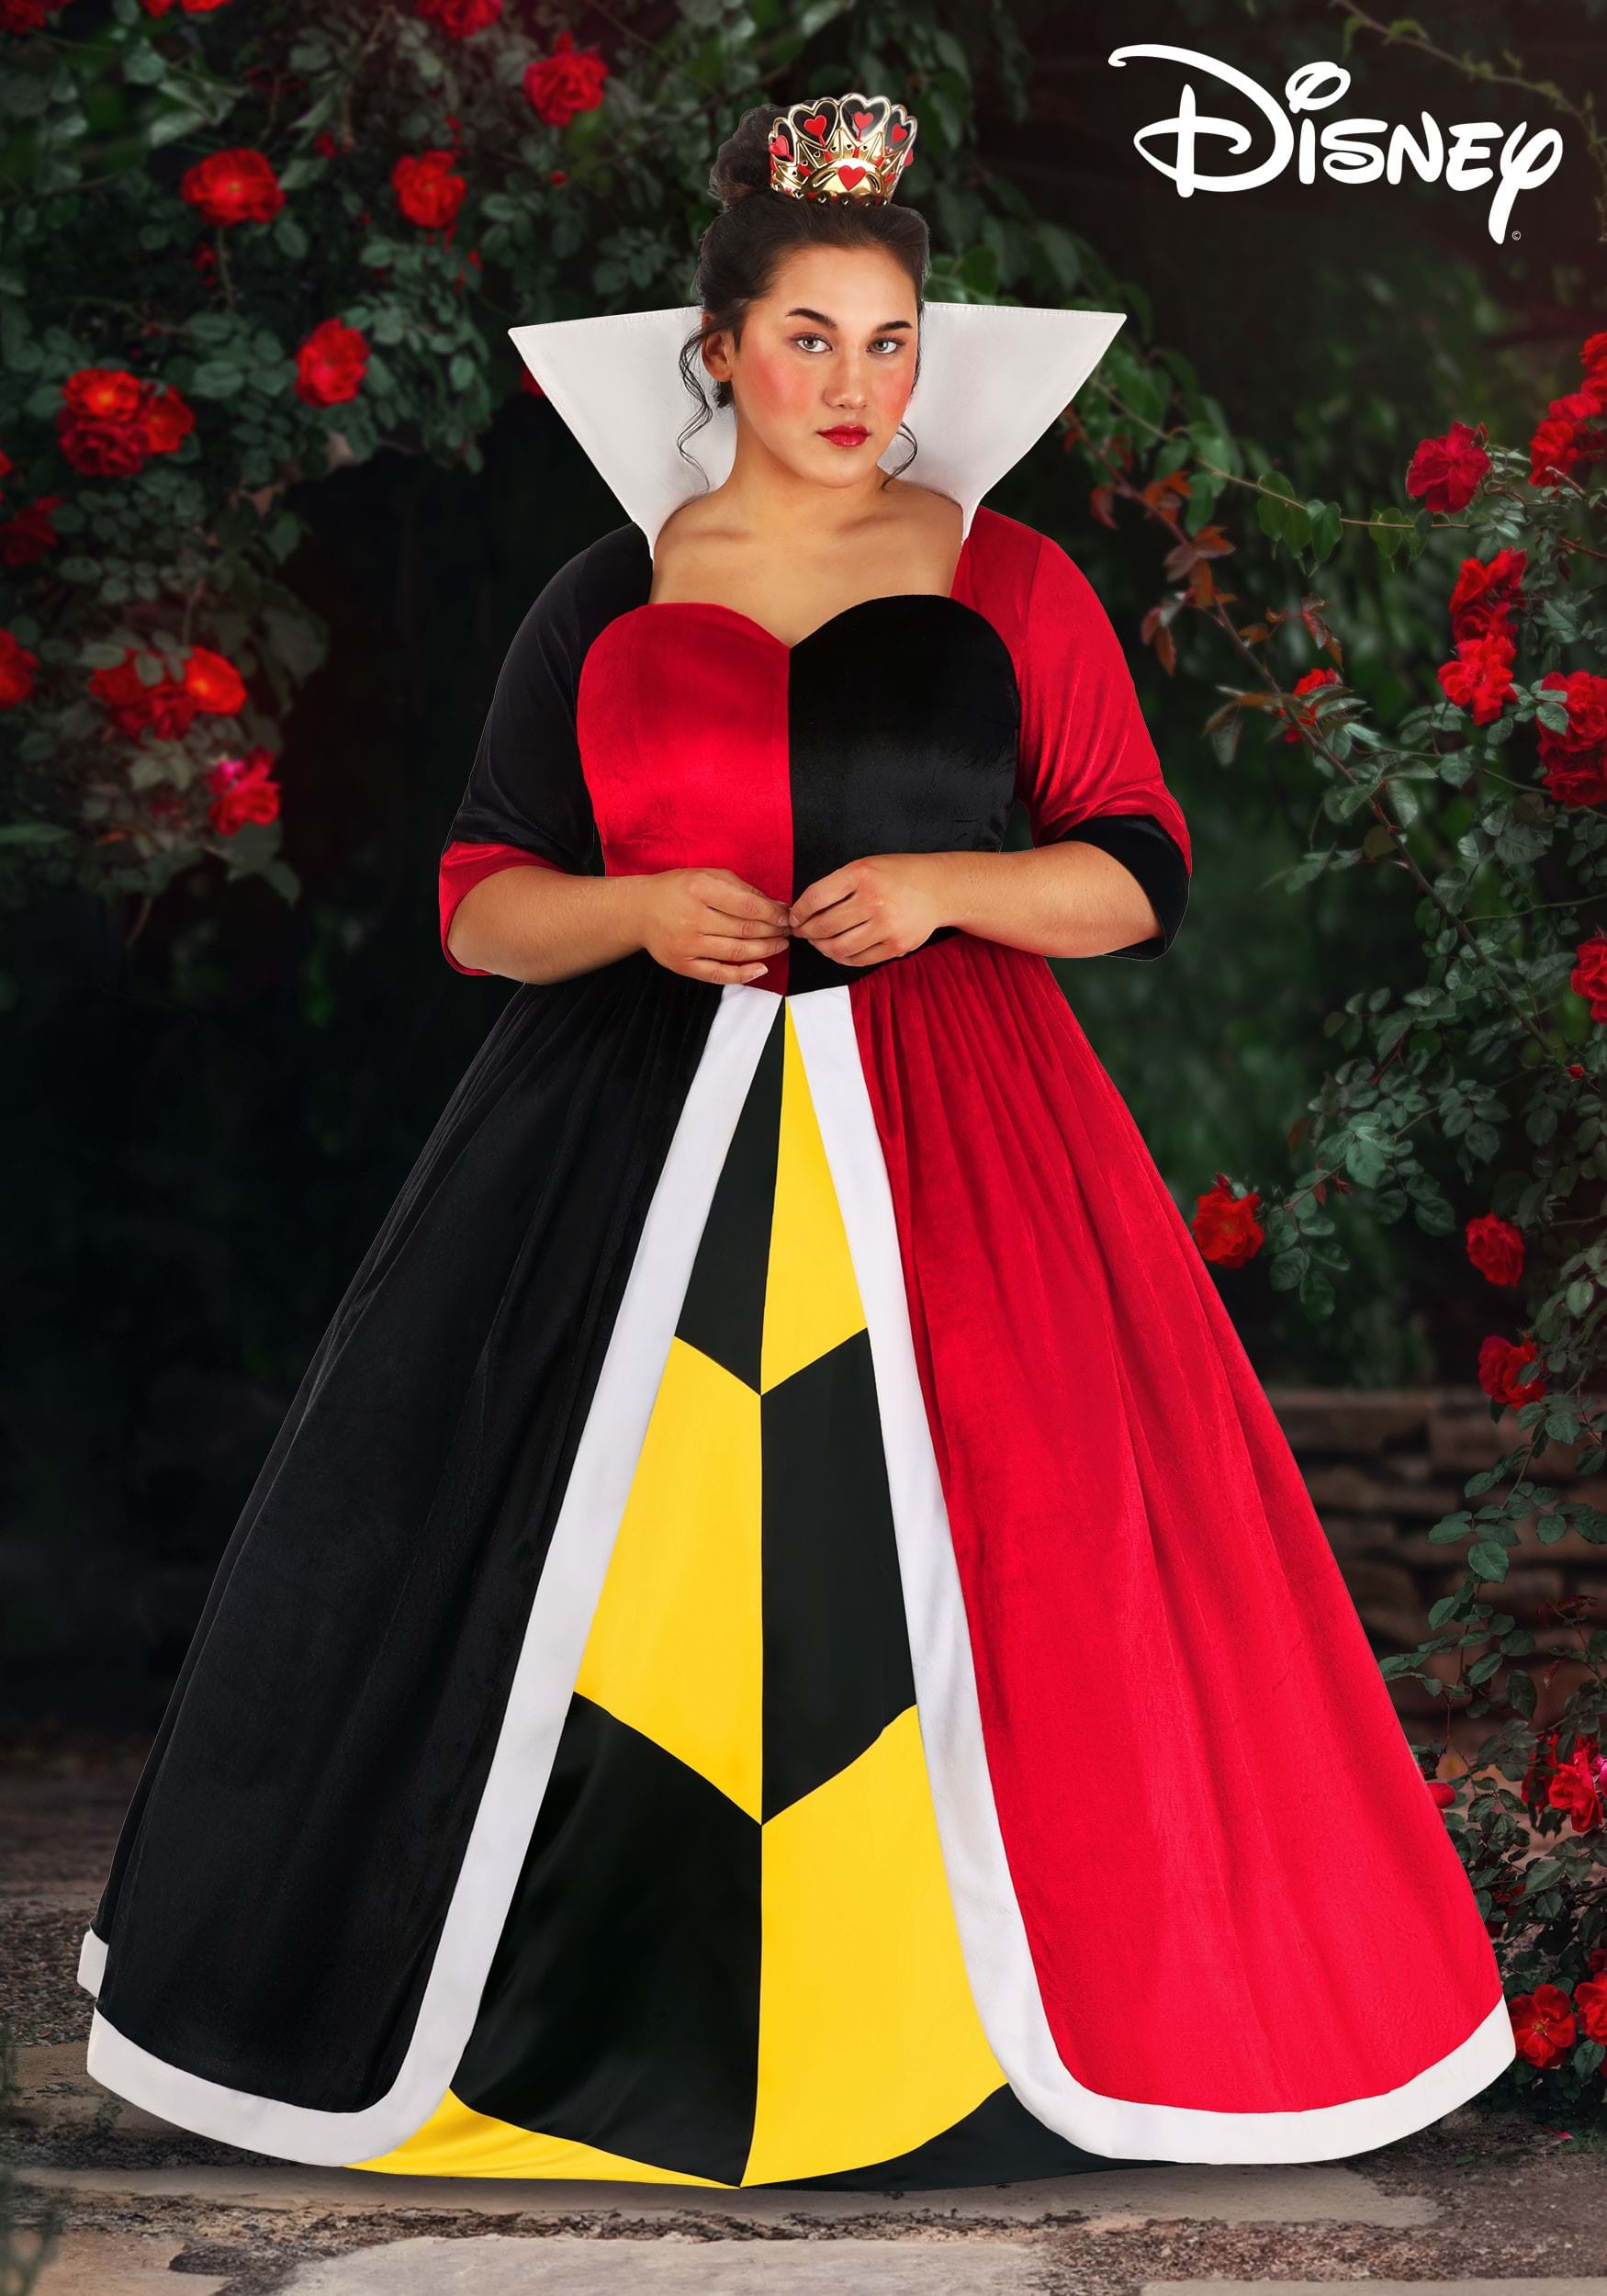 https://images.halloweencostumes.com/products/86113/1-1/plus-size-deluxe-disney-queen-of-hearts-costume-update.jpg